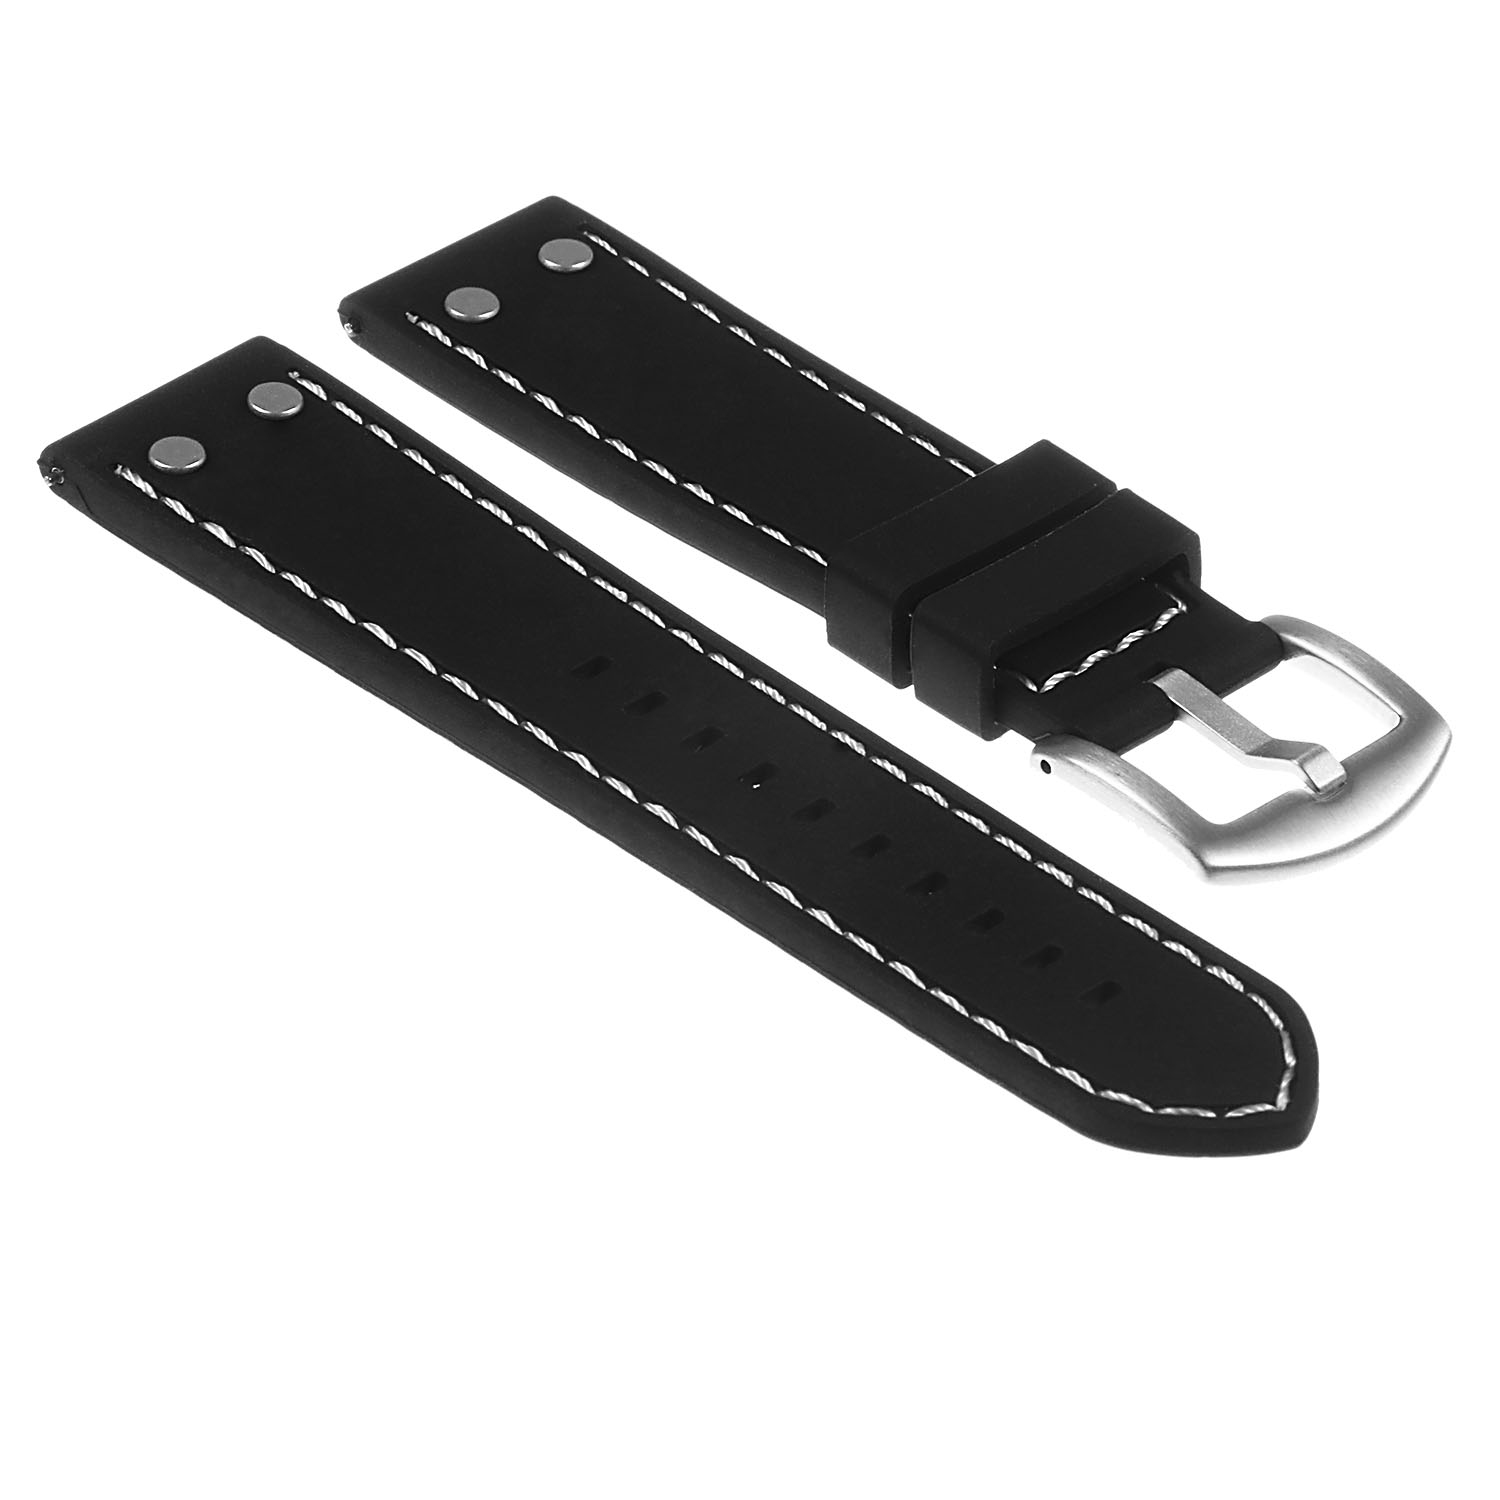 StrapsCo Silicone Rubber Aviator 22mm Watch Band Strap for LG G Watch W100 - Black & White